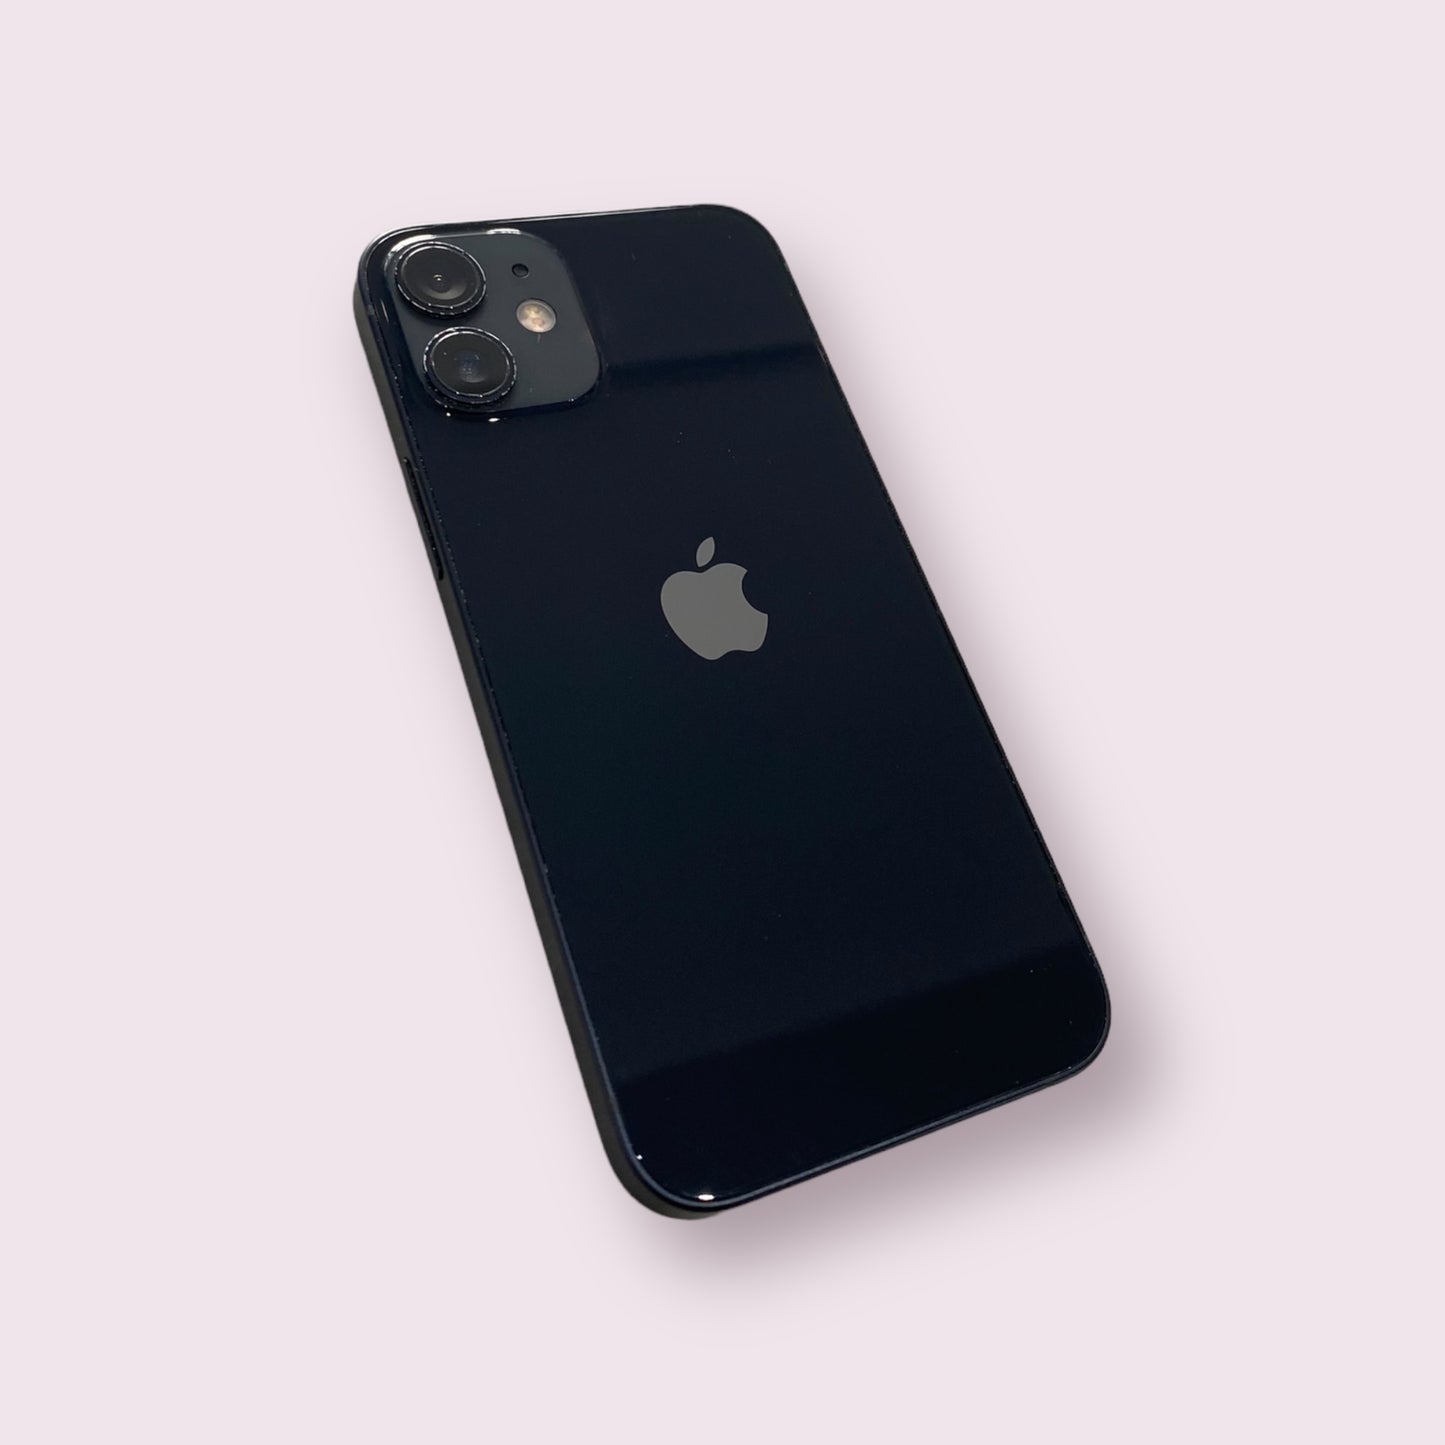 Apple iPhone 12 Mini 64GB Black - Unlocked - Grade B